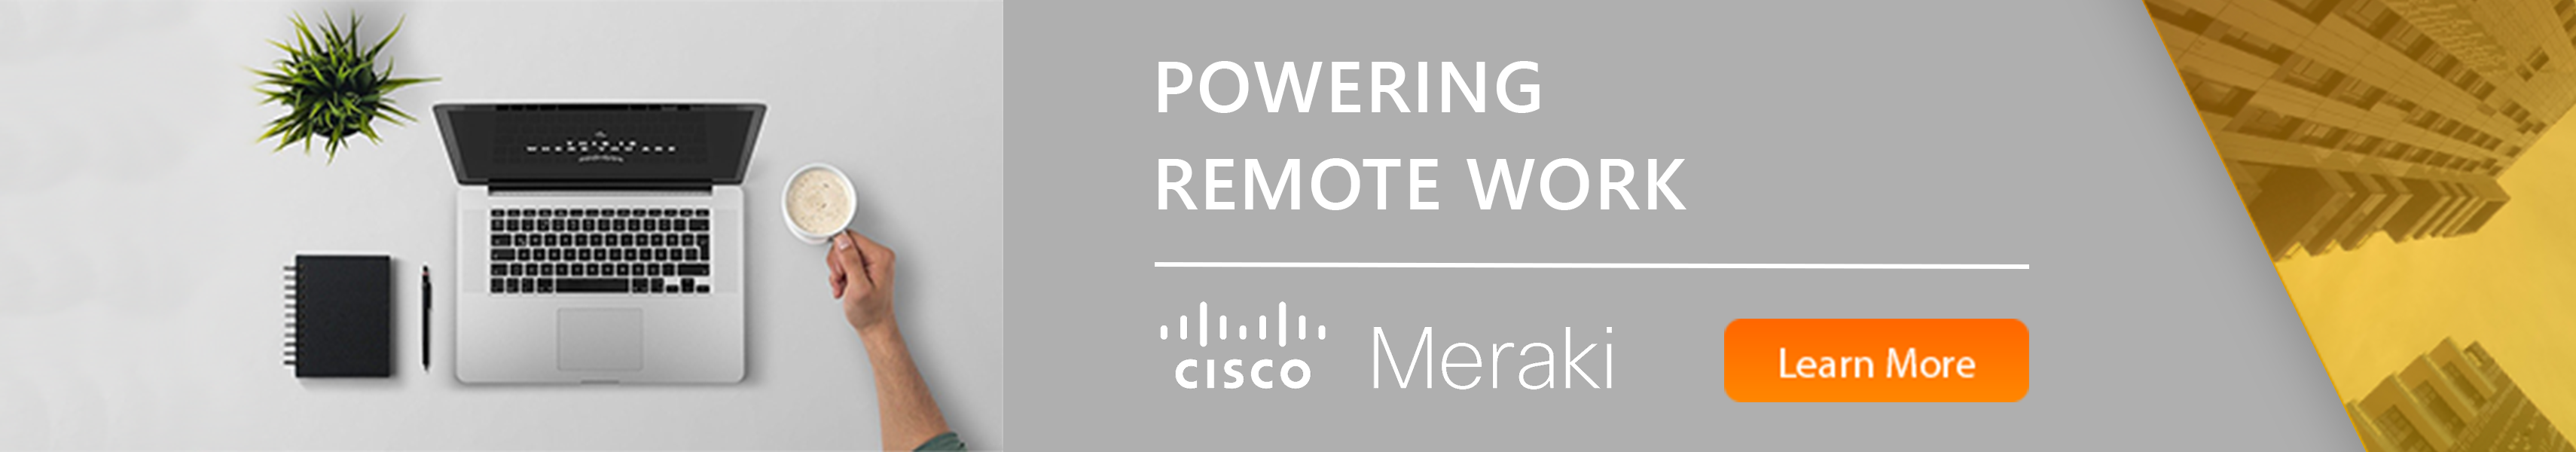 Cisco Meraki Go - Faster Networks Start with Dependable Hardware